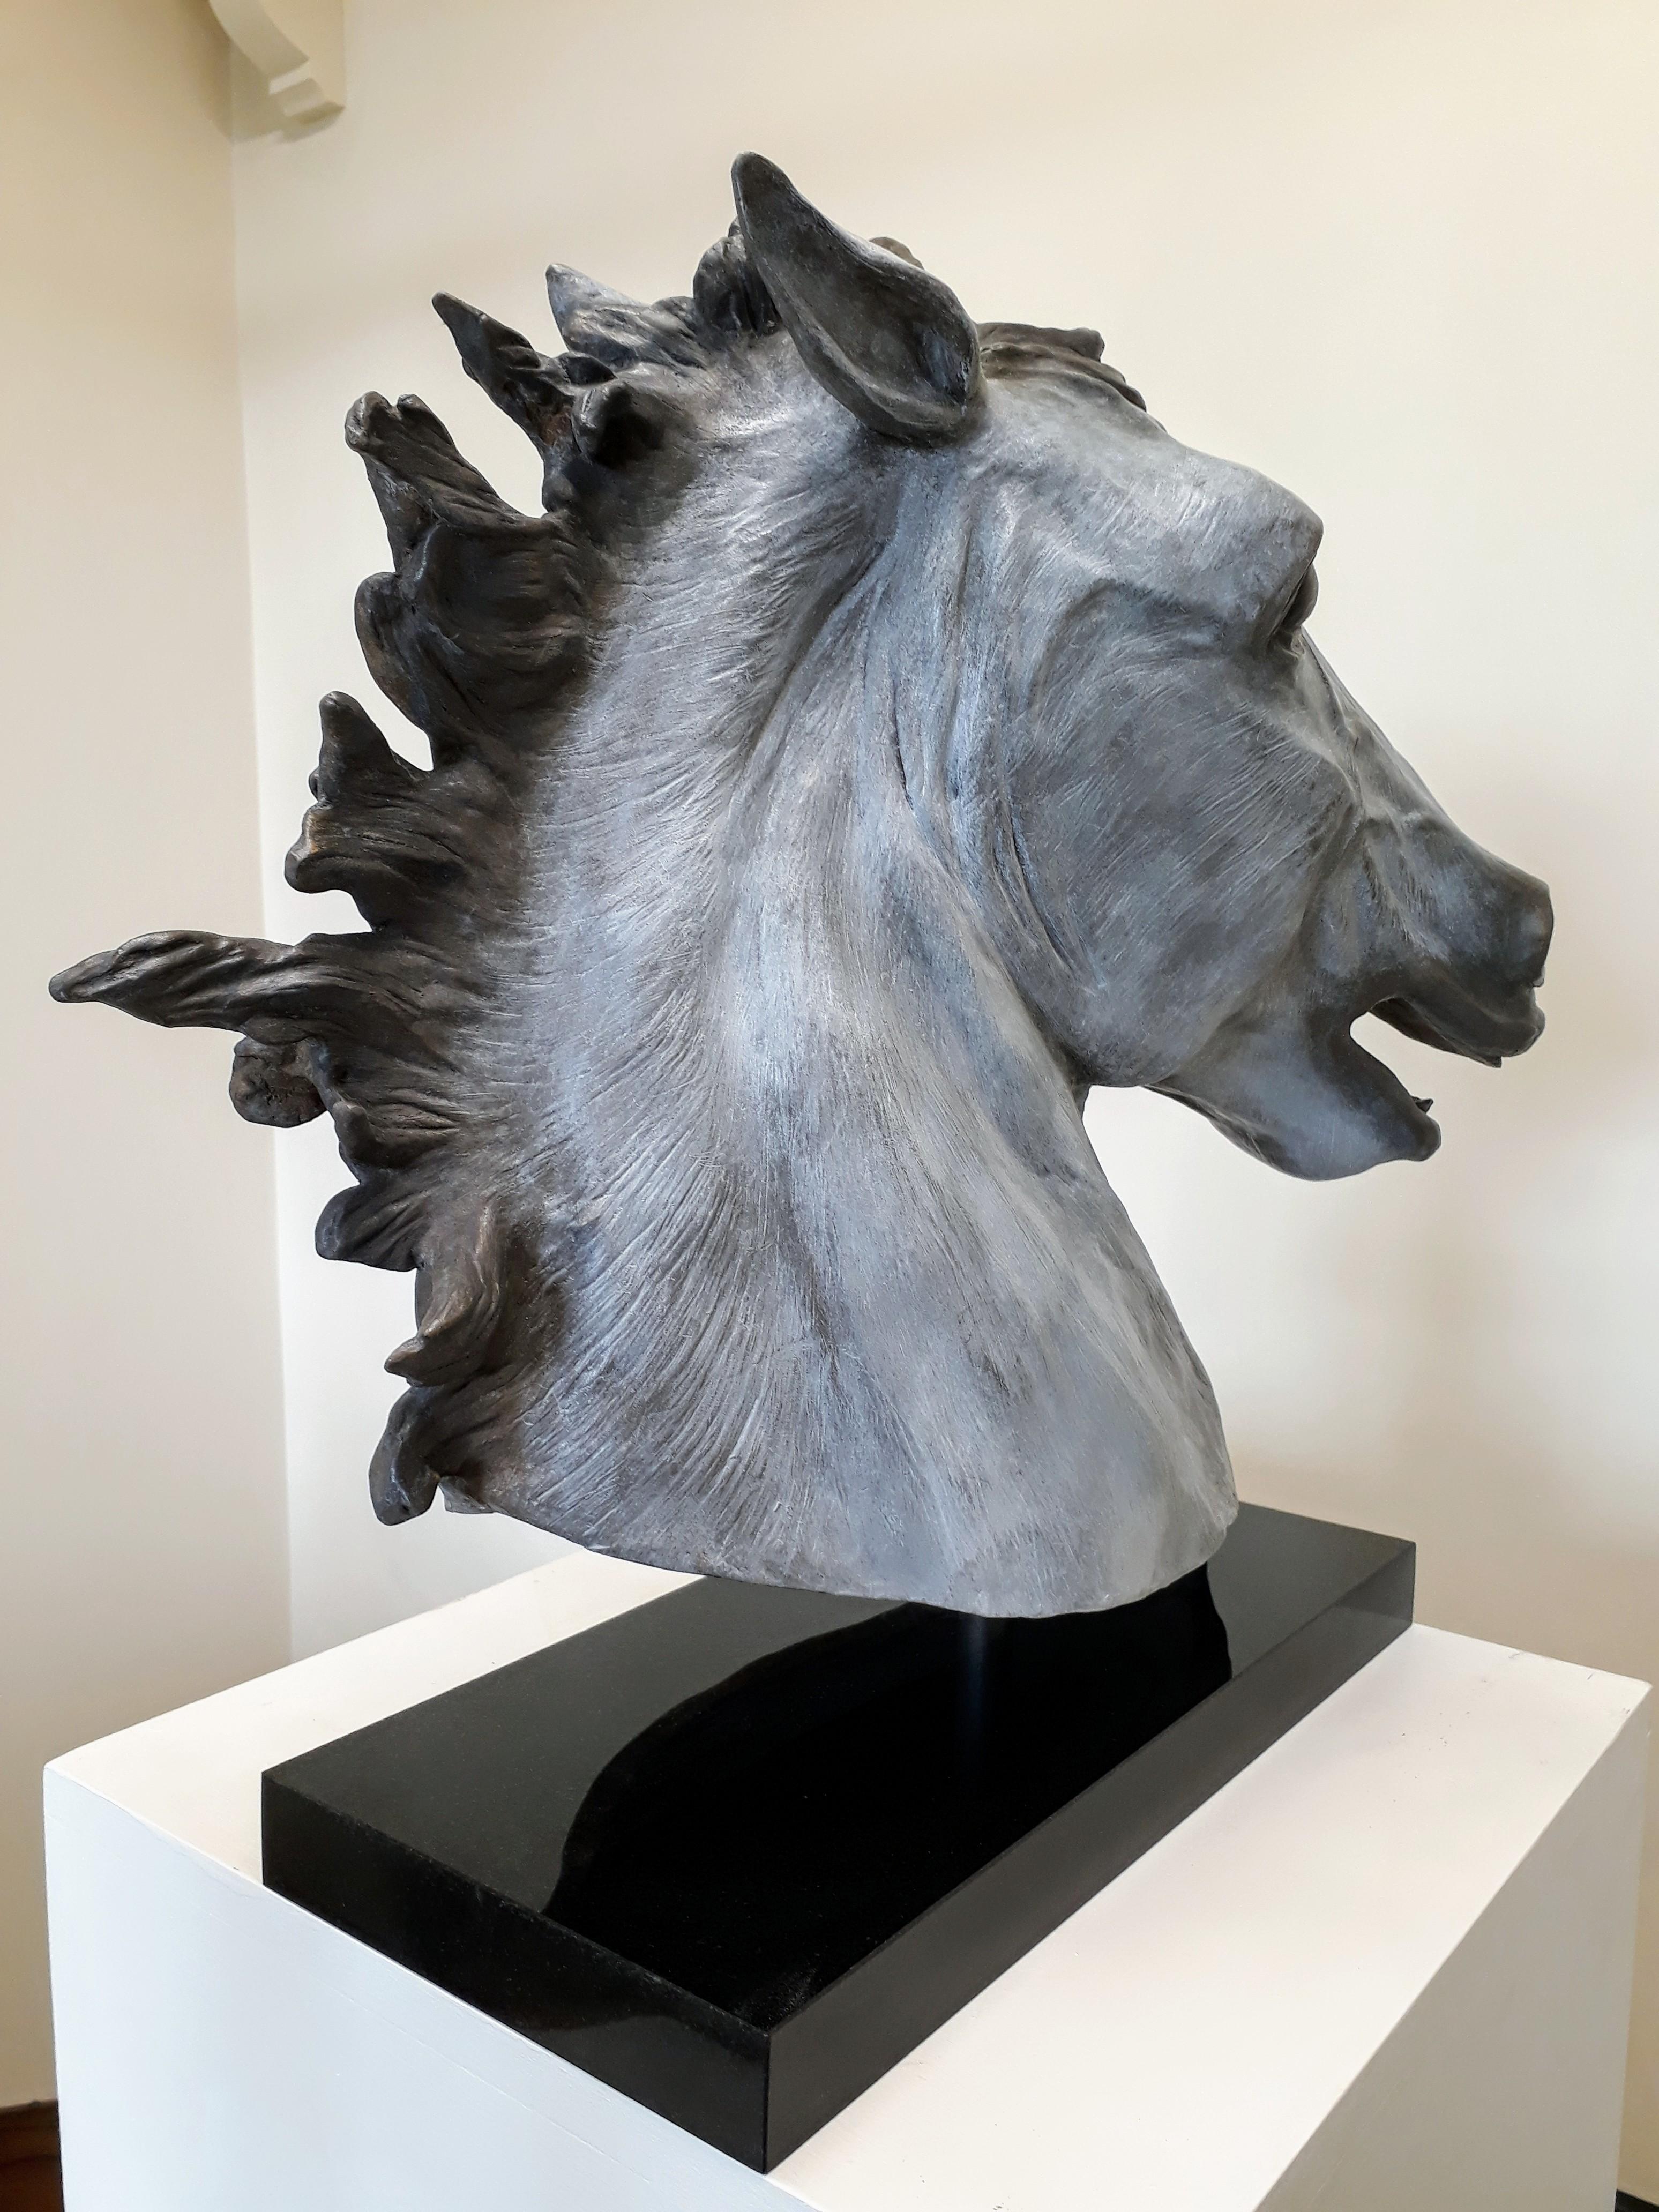 Equus Caballus (modern horse) - Sculpture by Barry Davies